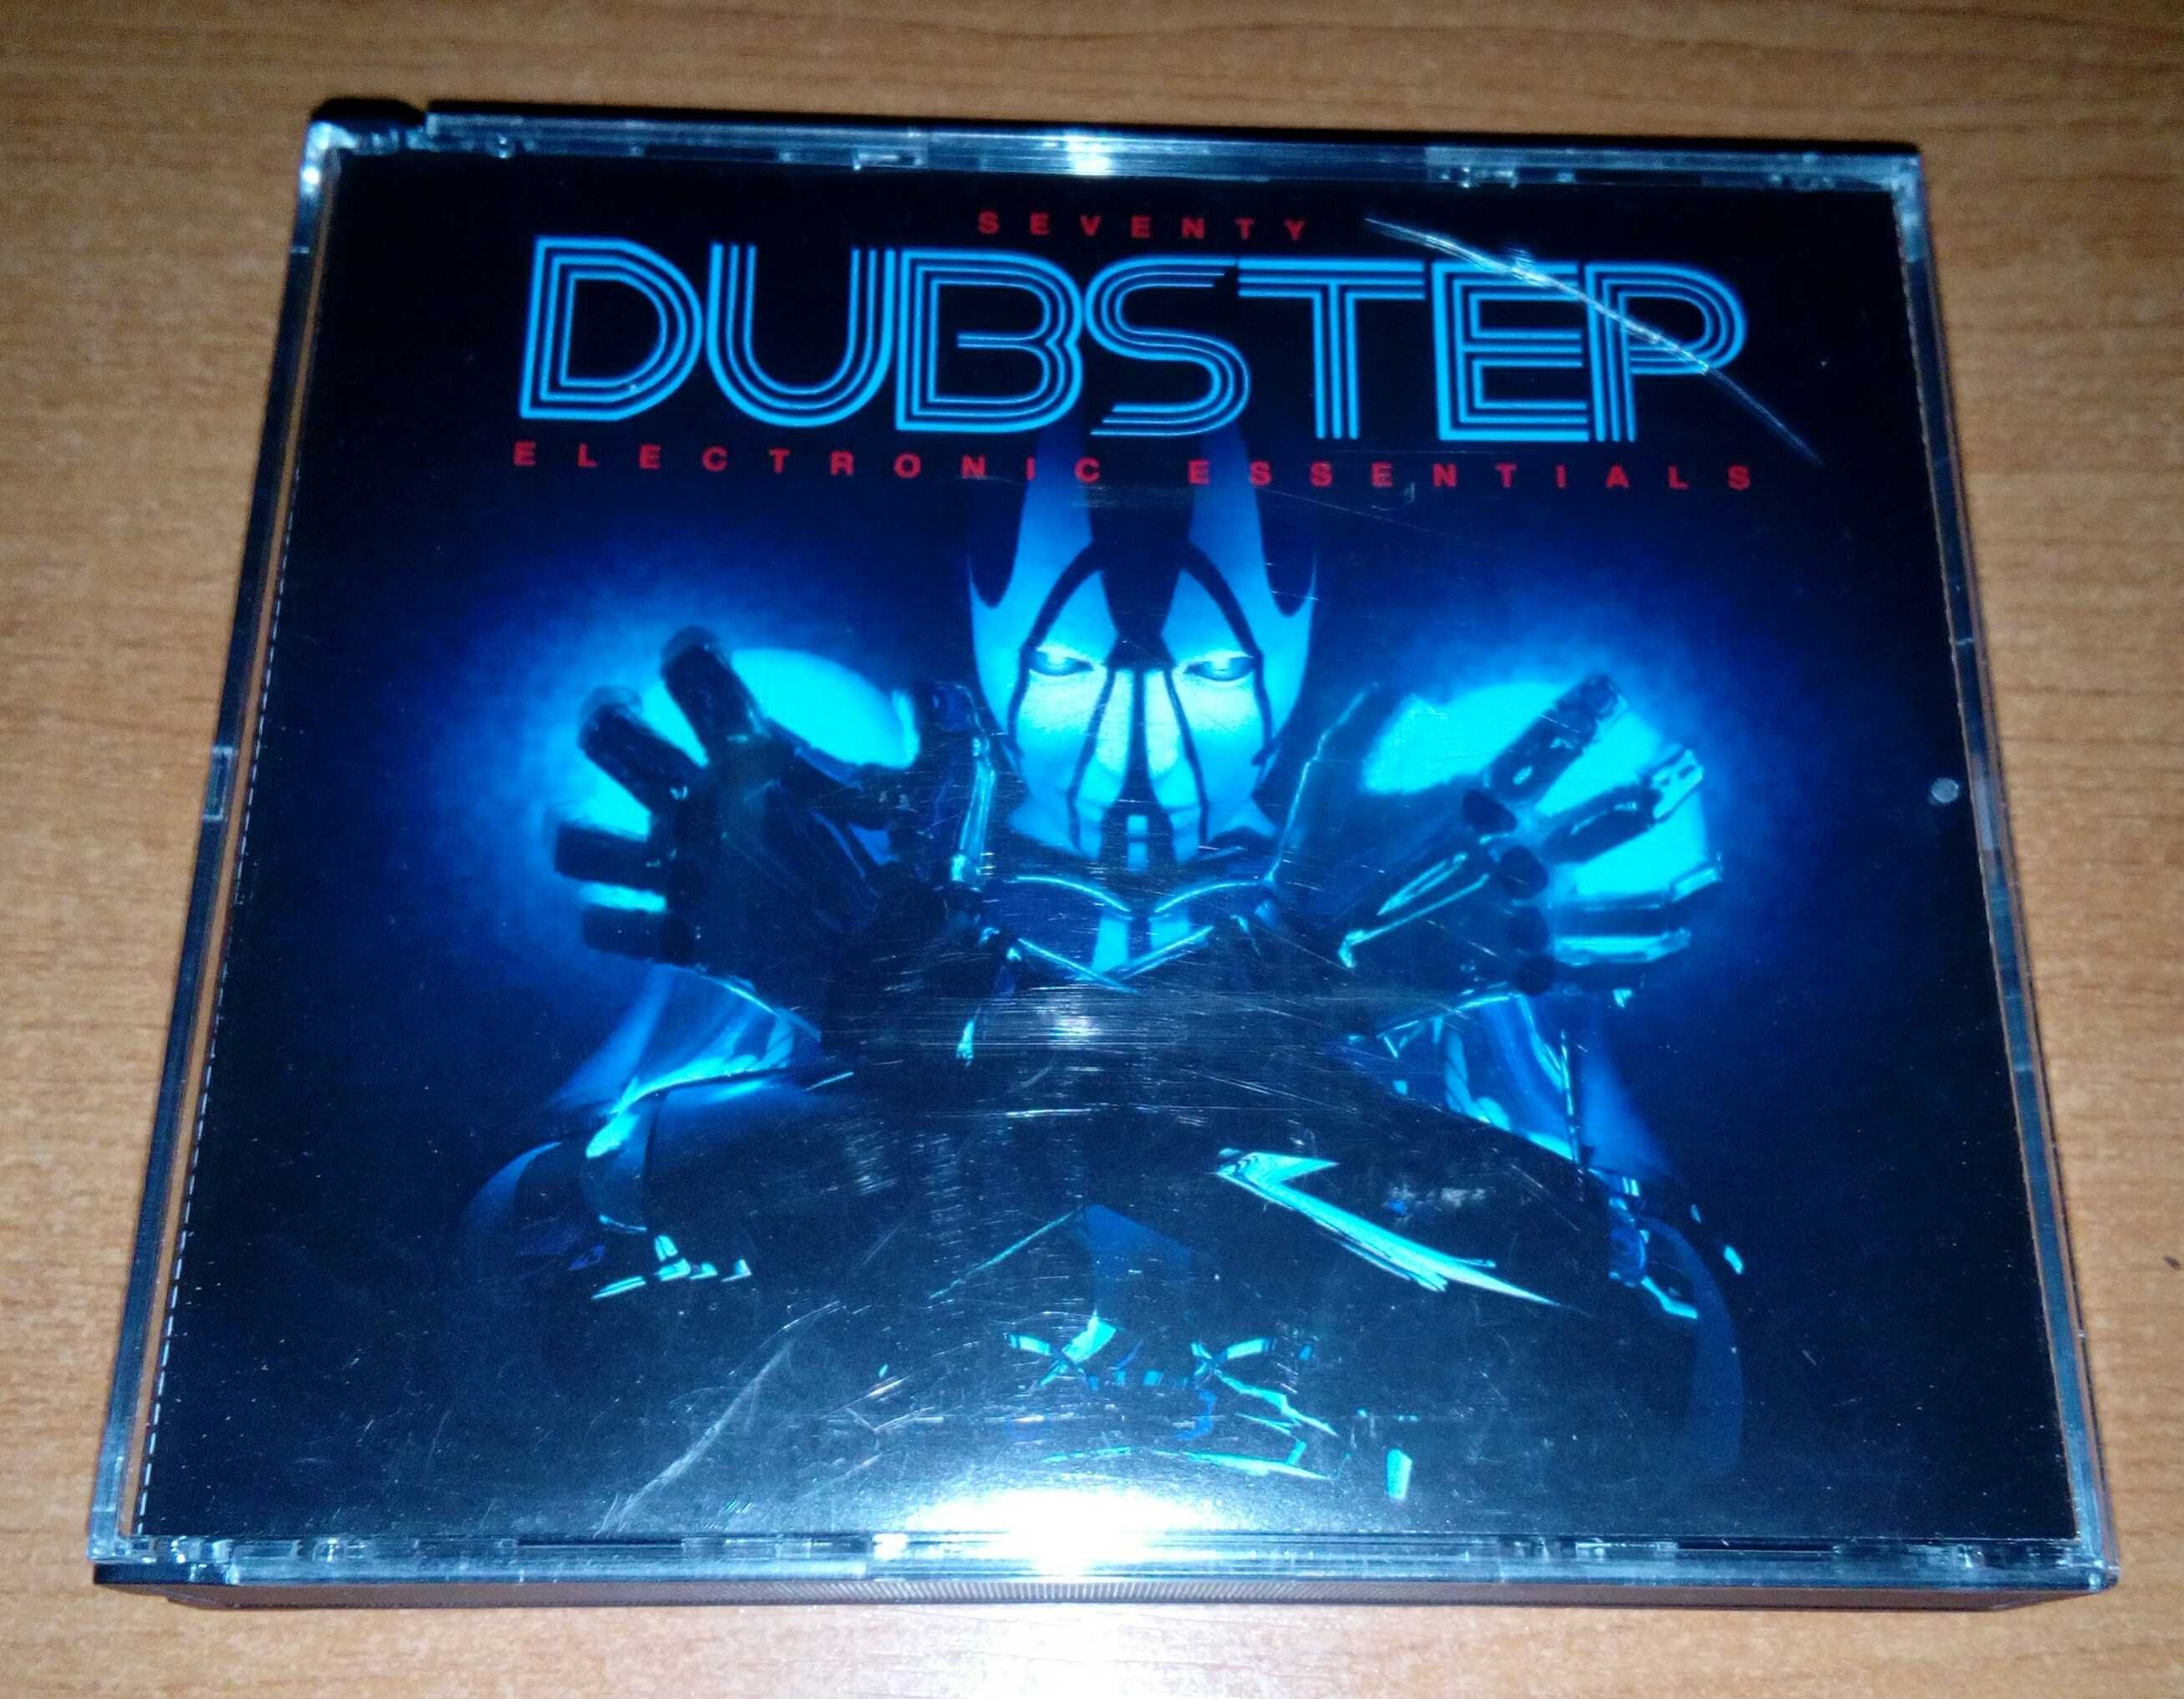 4CD Audio Seventy Dubstep Electronic Essentials (2012)